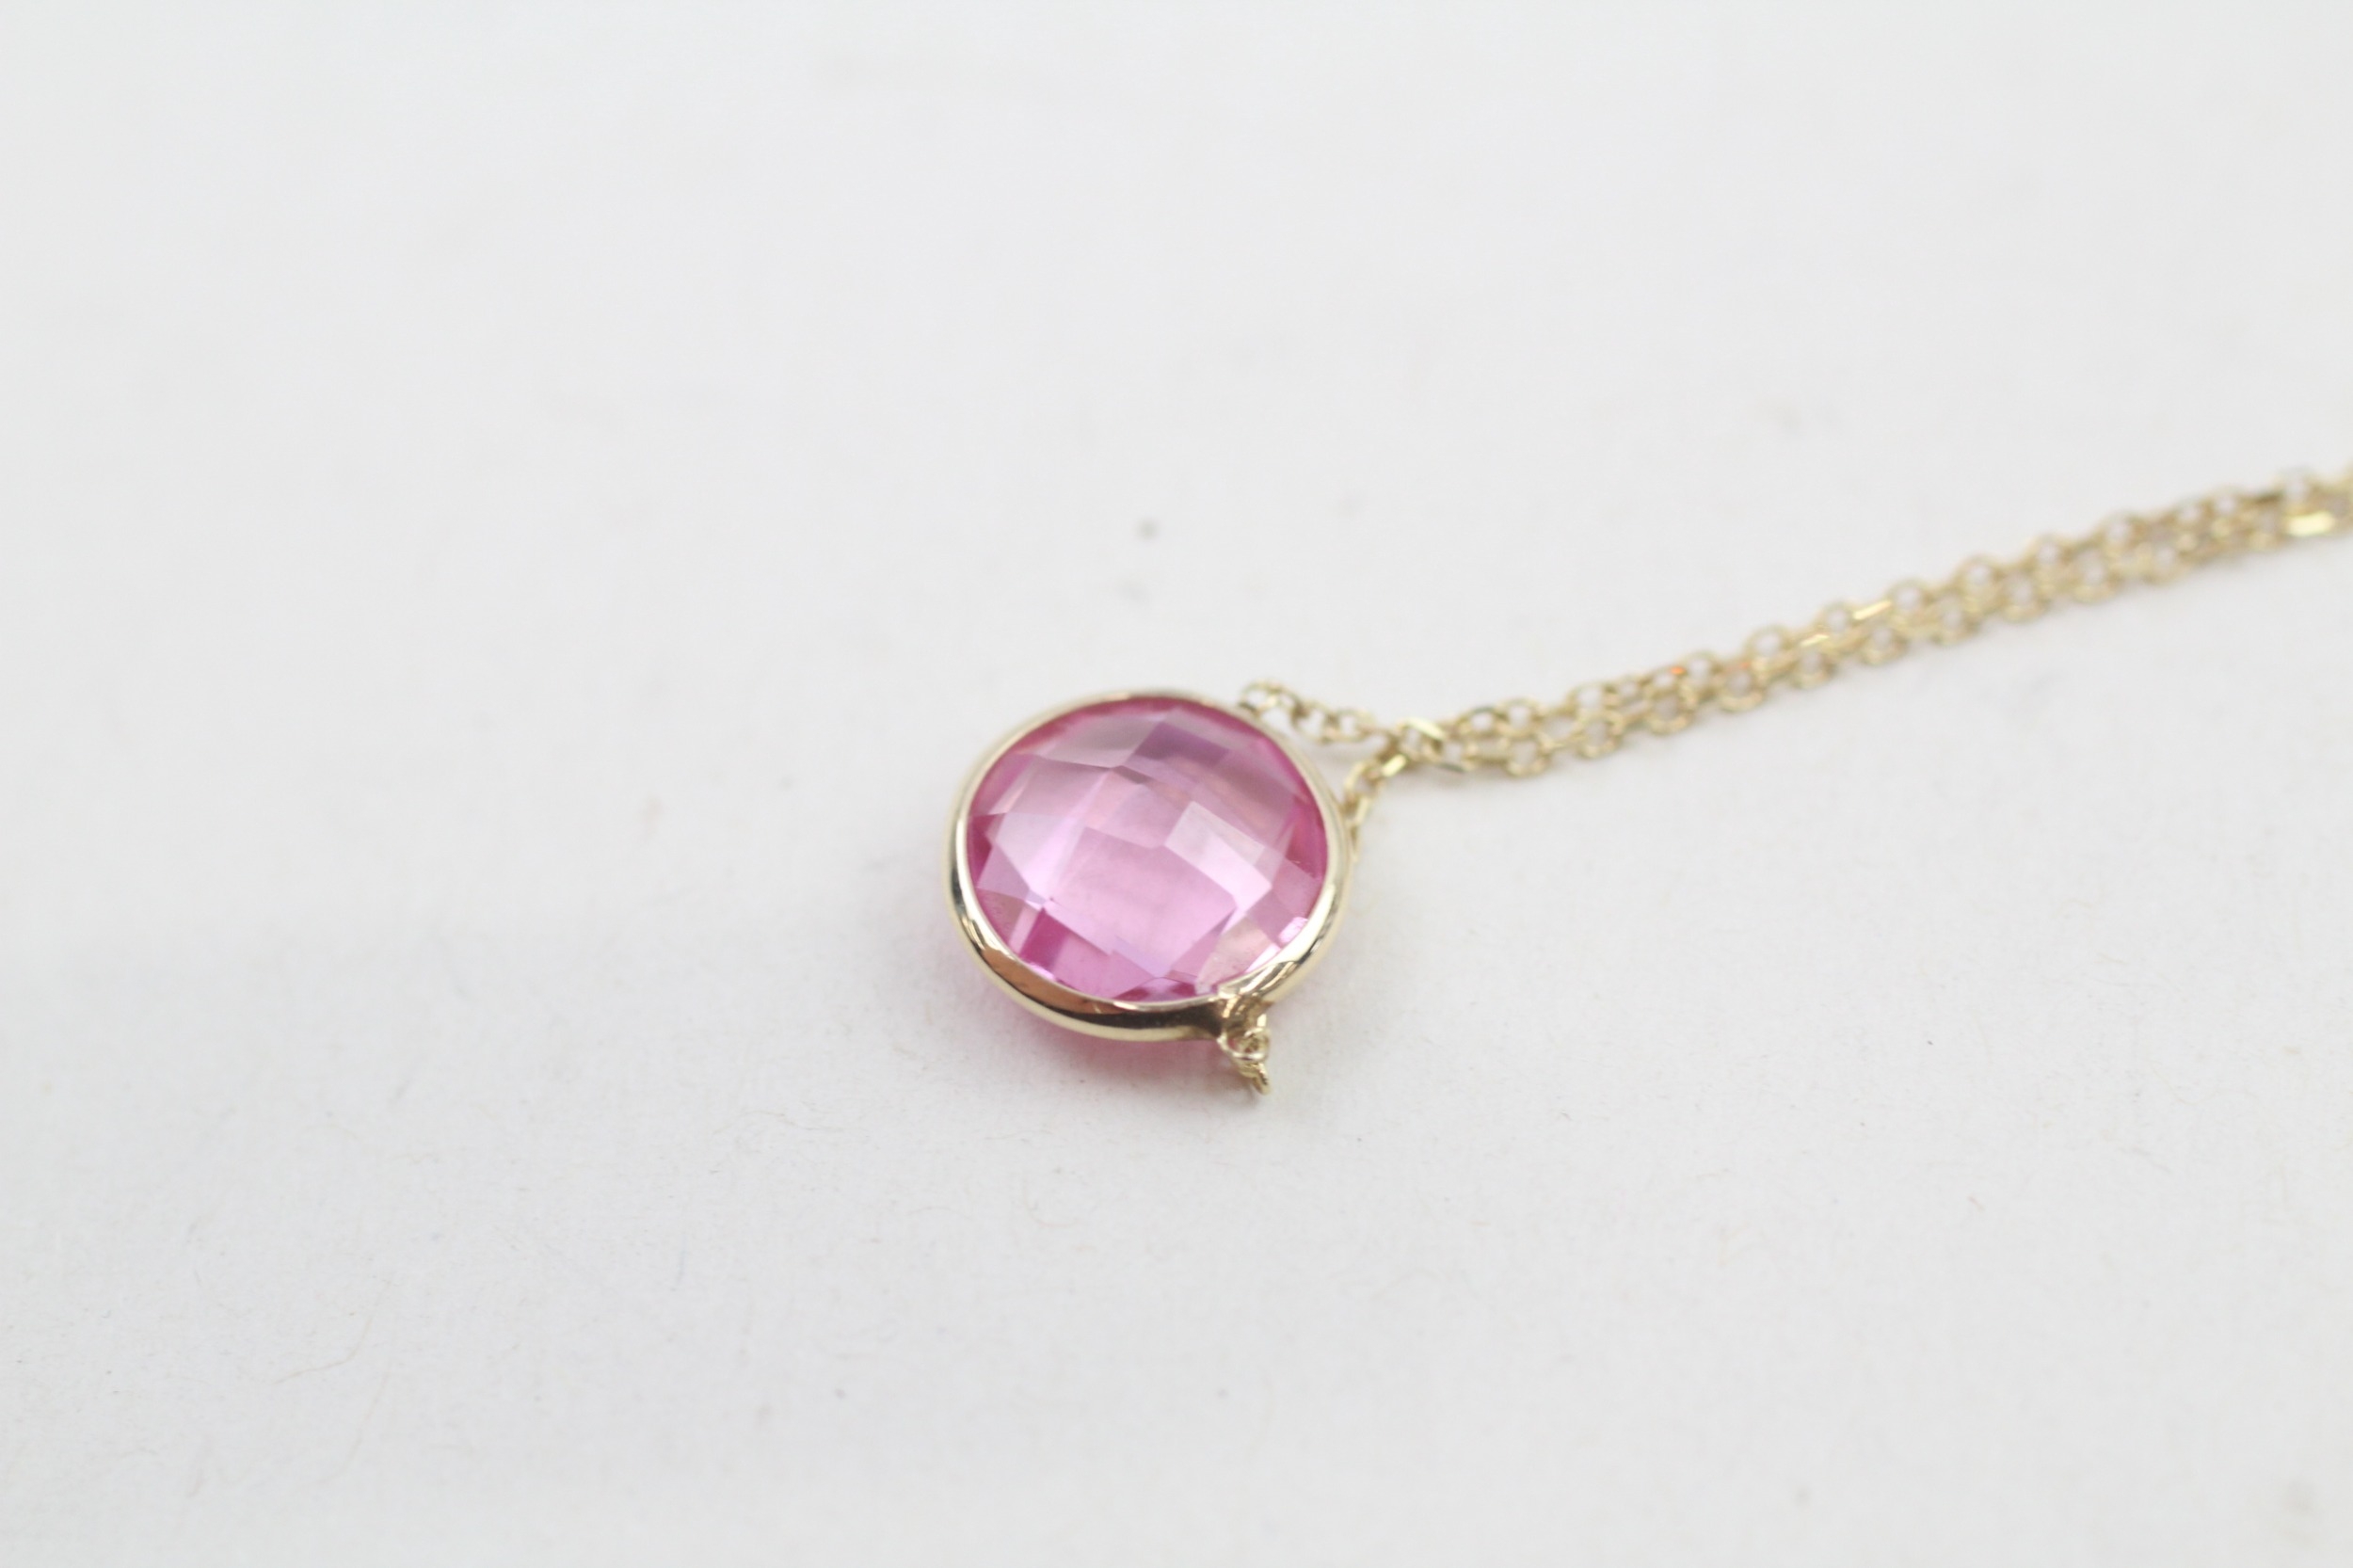 14ct gold faceted pink gemstonependant necklace, bezel set (1.3g) - Image 4 of 5